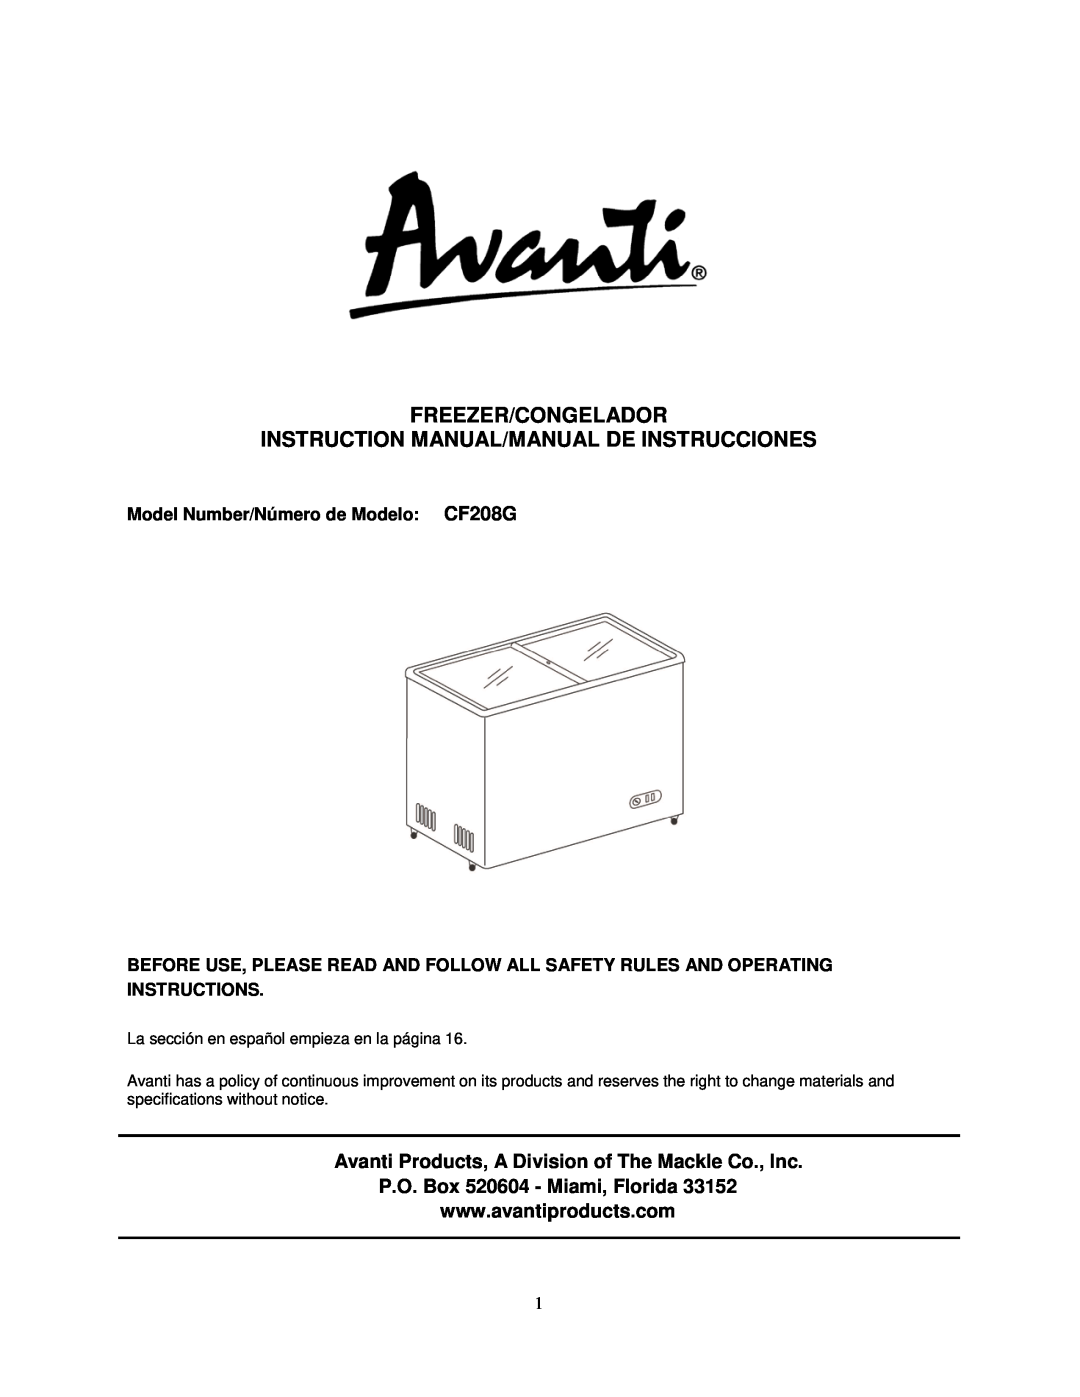 Avanti CF208G instruction manual Freezer/Congelador, P.O. Box 520604 - Miami, Florida 